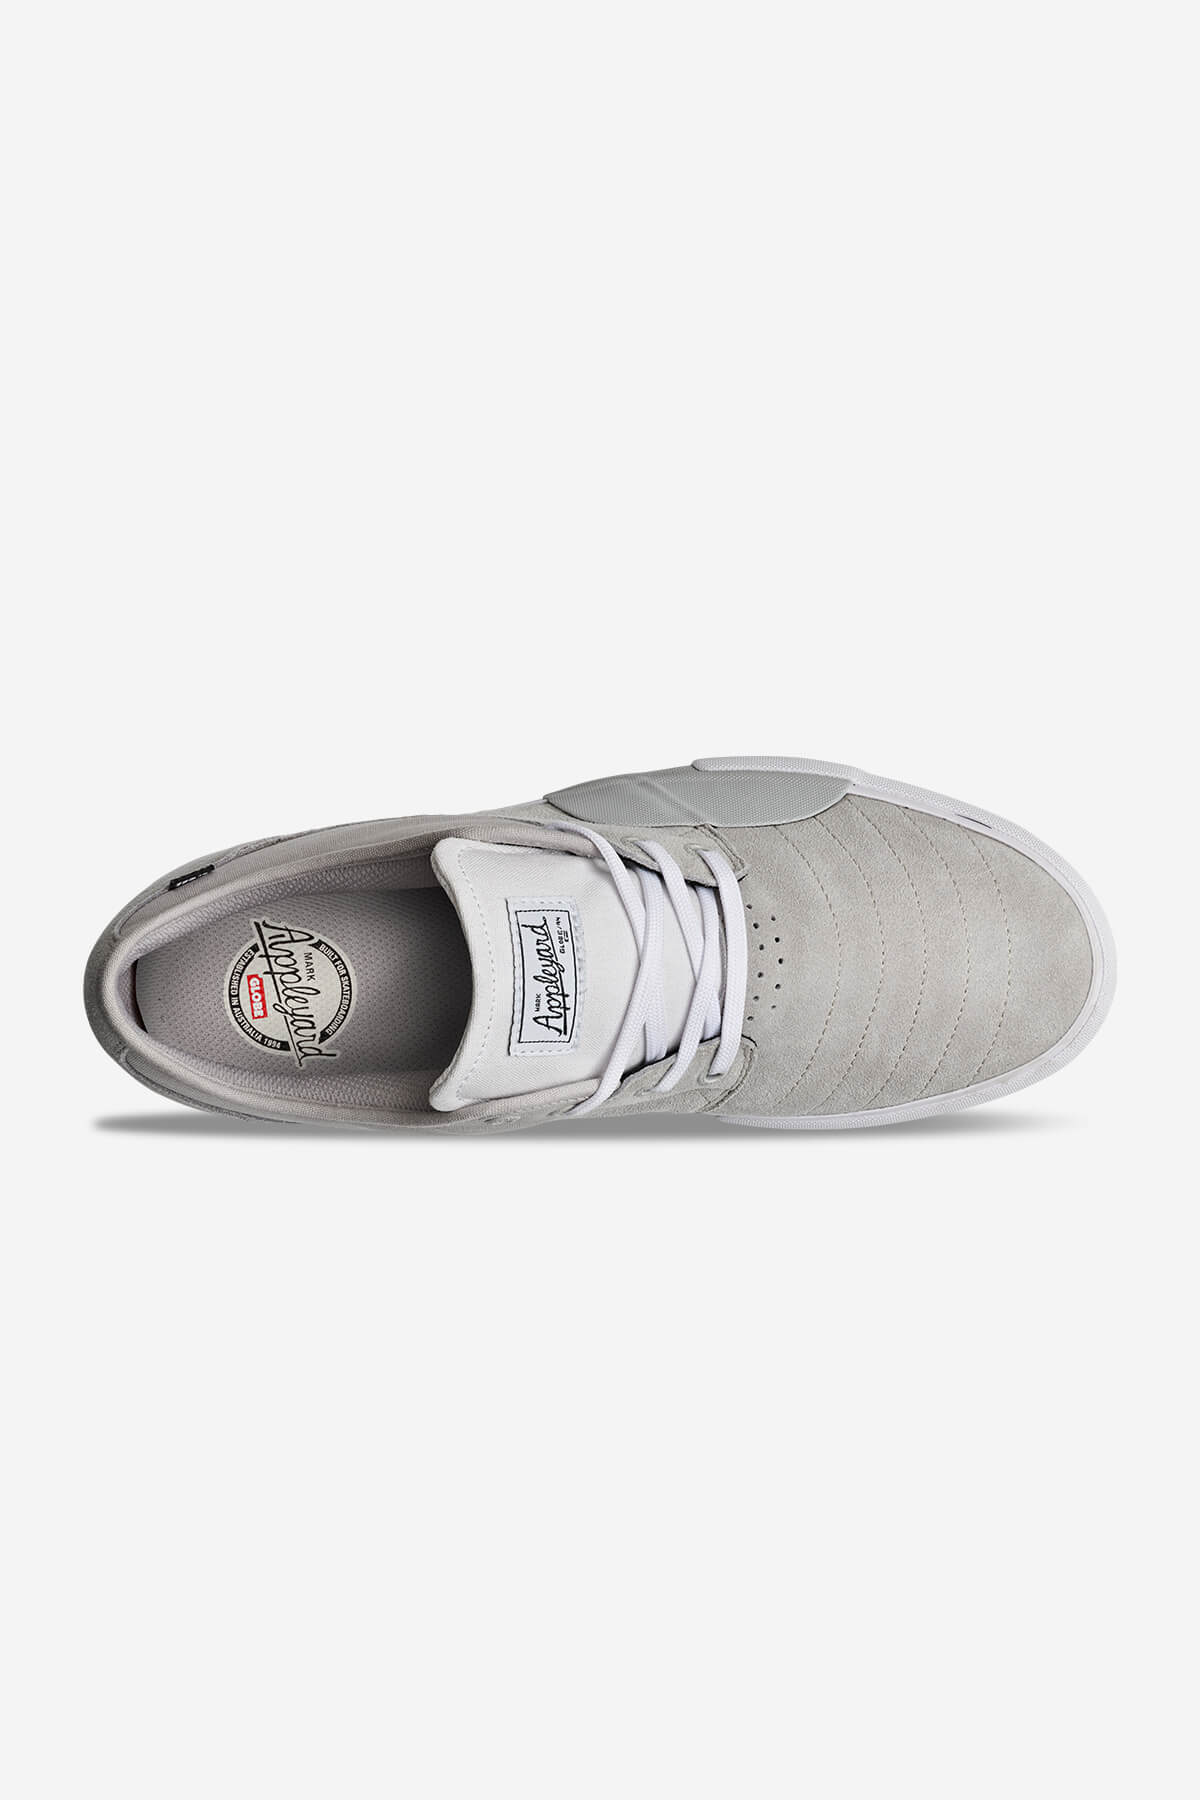 Globe - Mahalo Plus - Grey/White - skateboard Chaussures